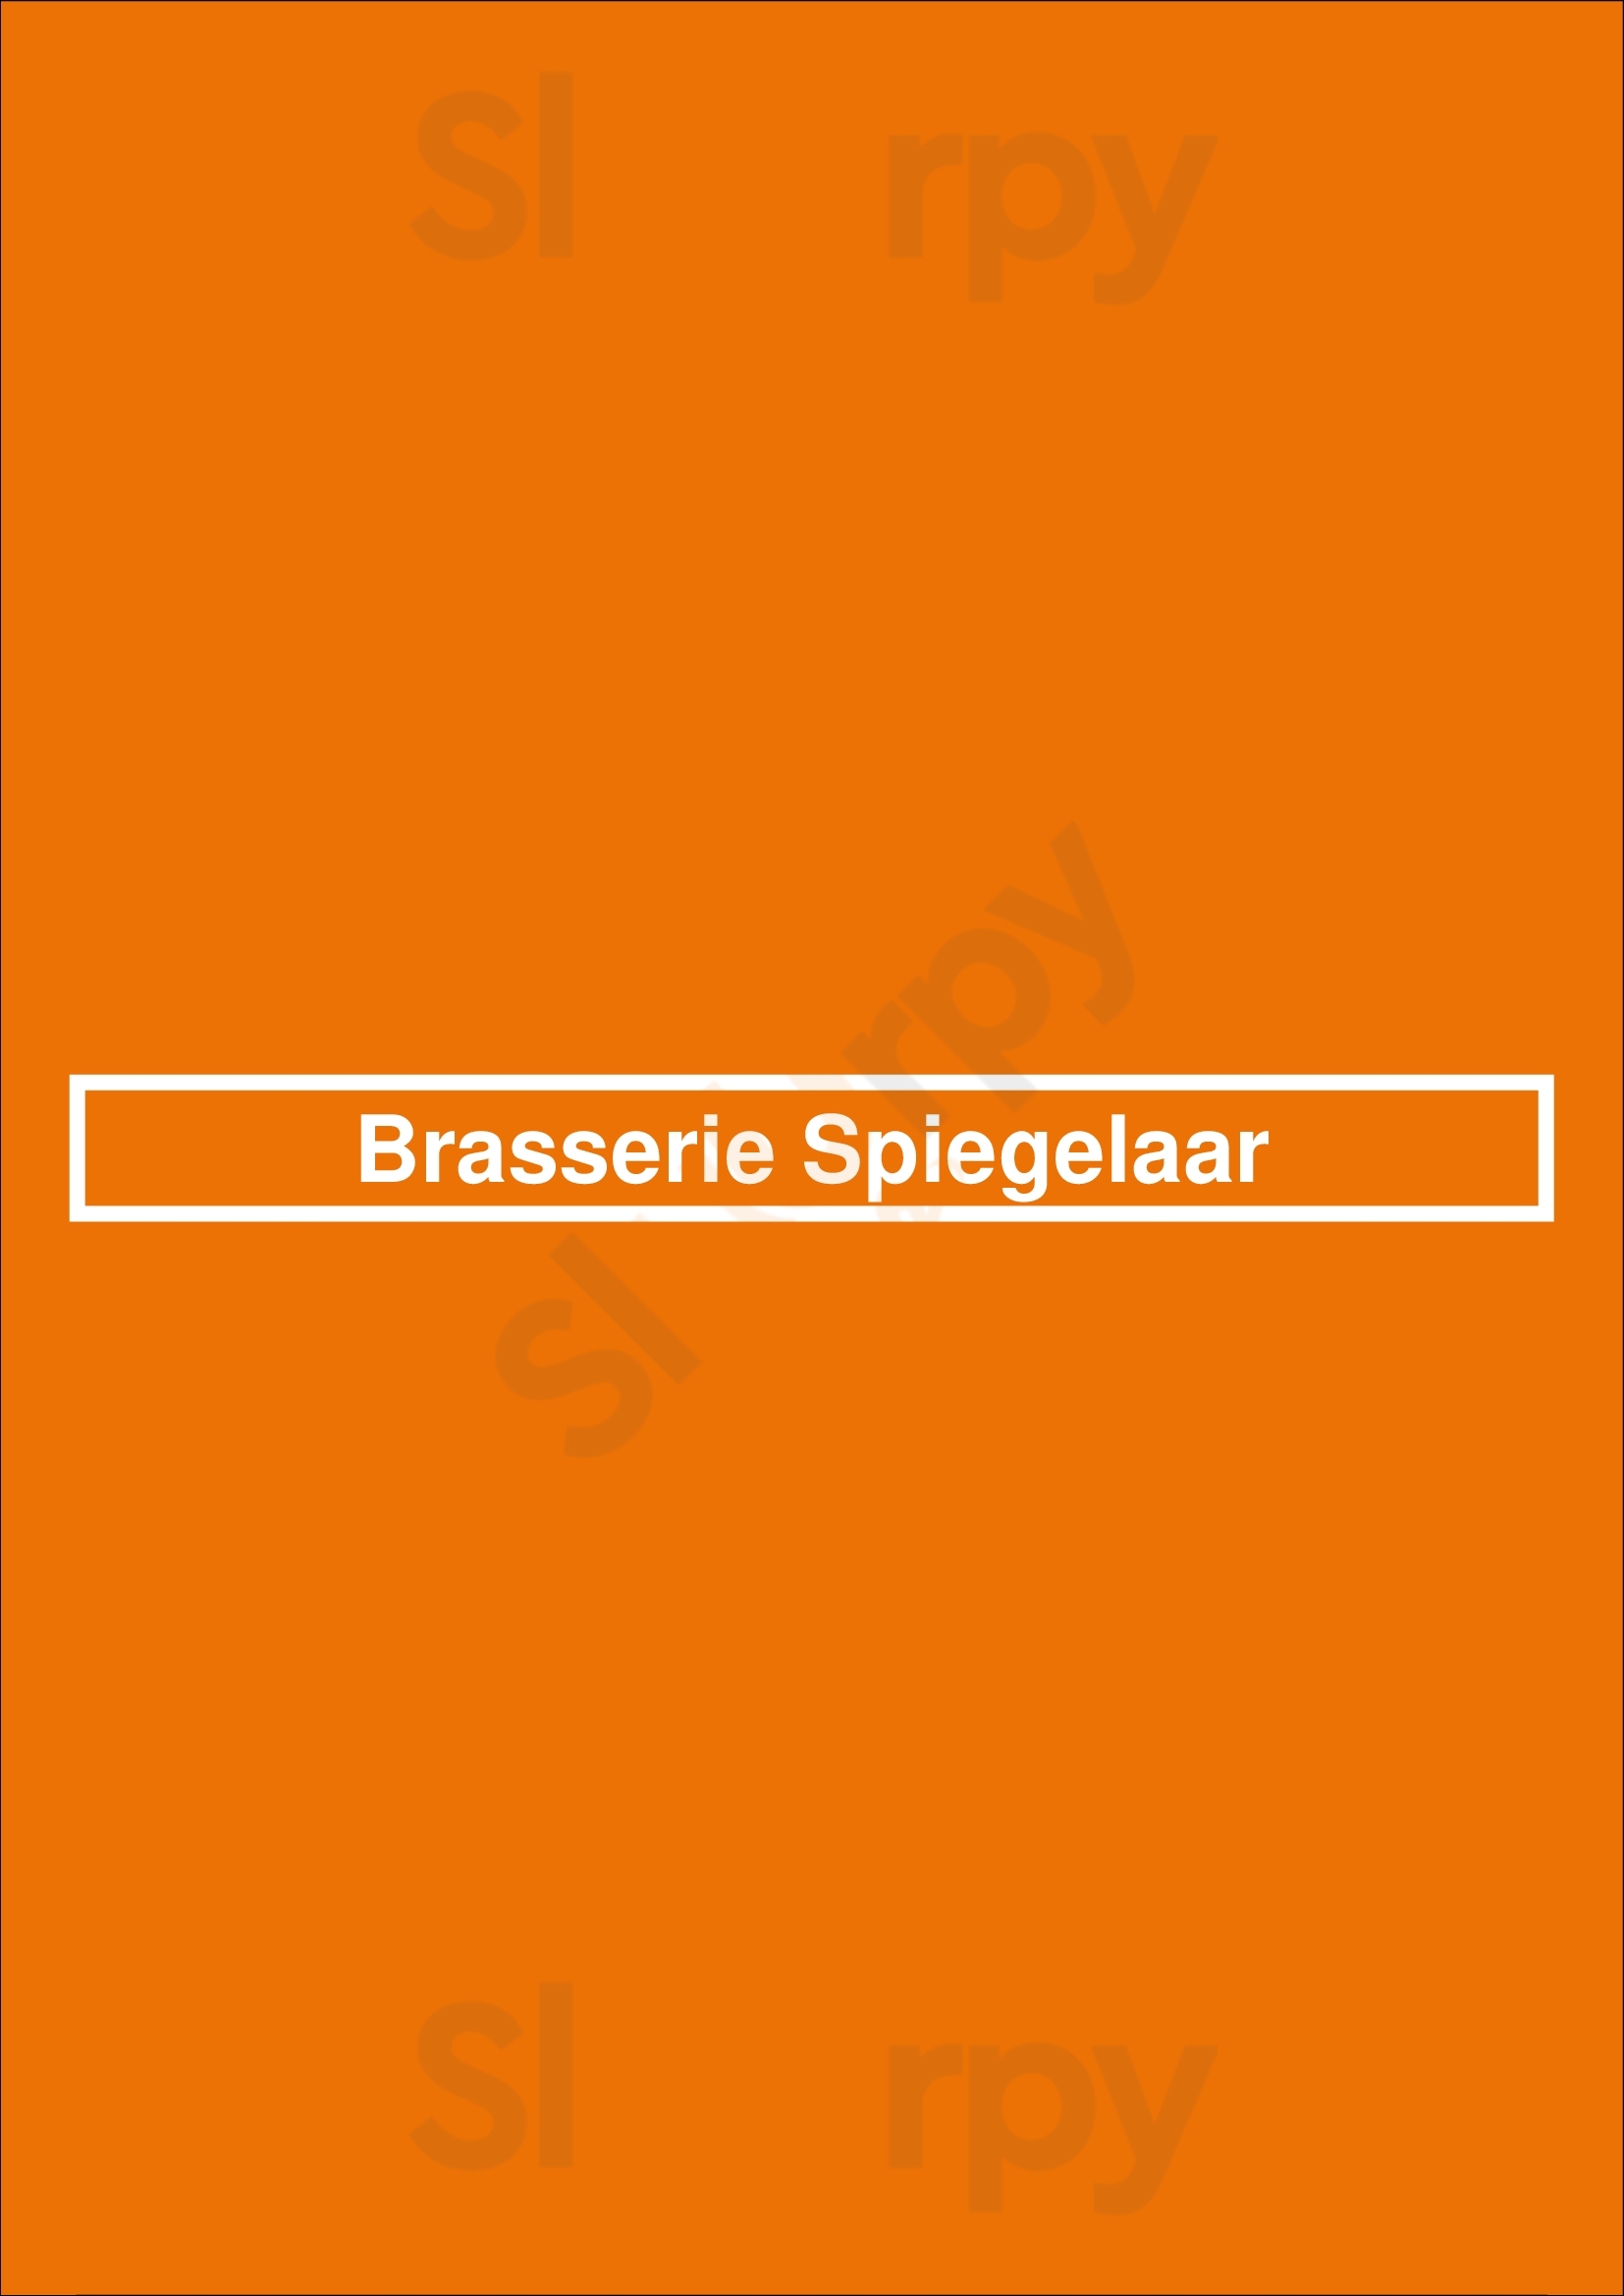 Brasserie Spiegelaar Leeuwarden Menu - 1